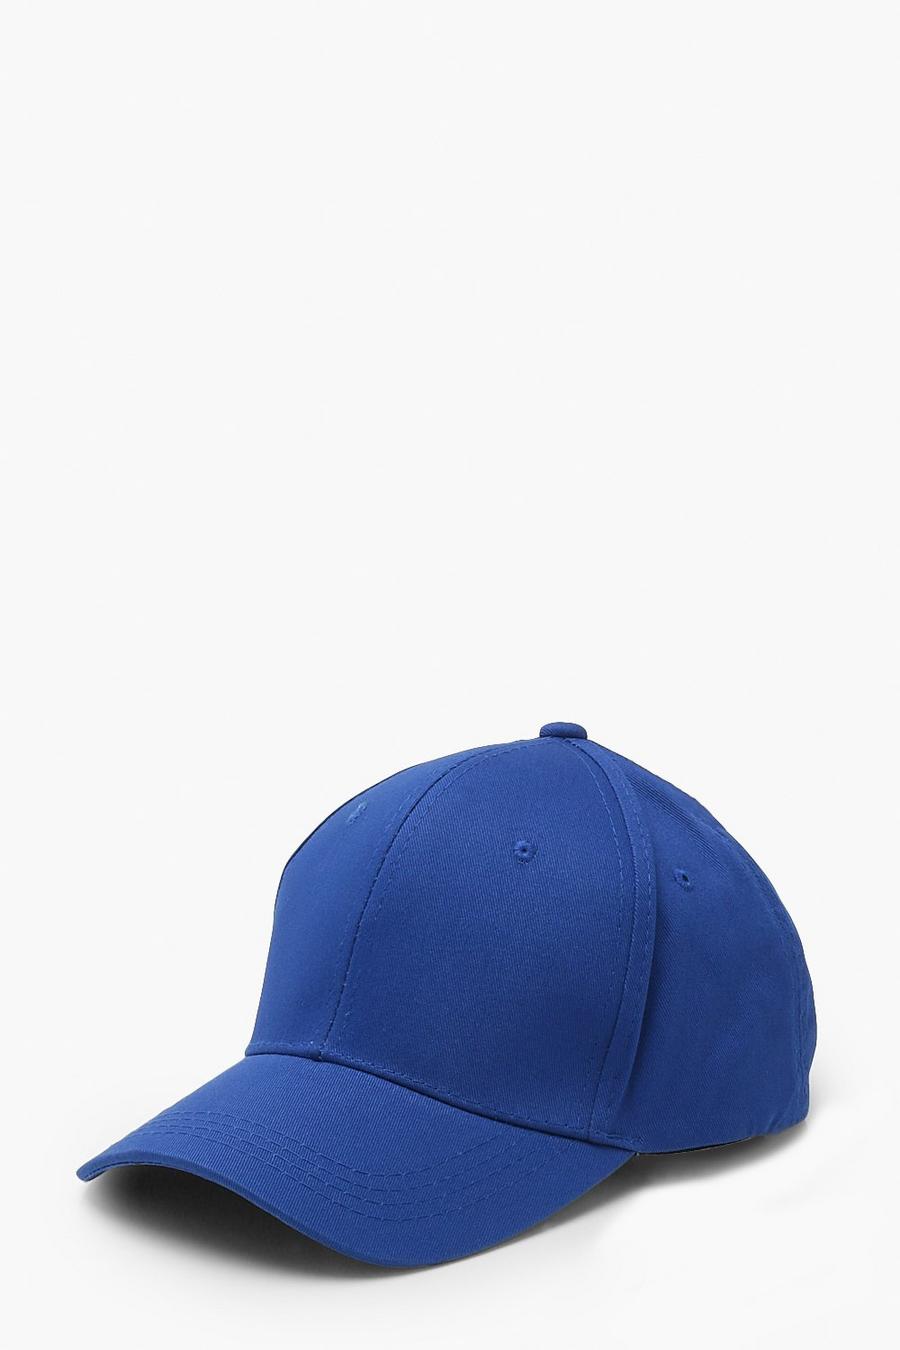 Baseball-Kappe, Cobalt blue